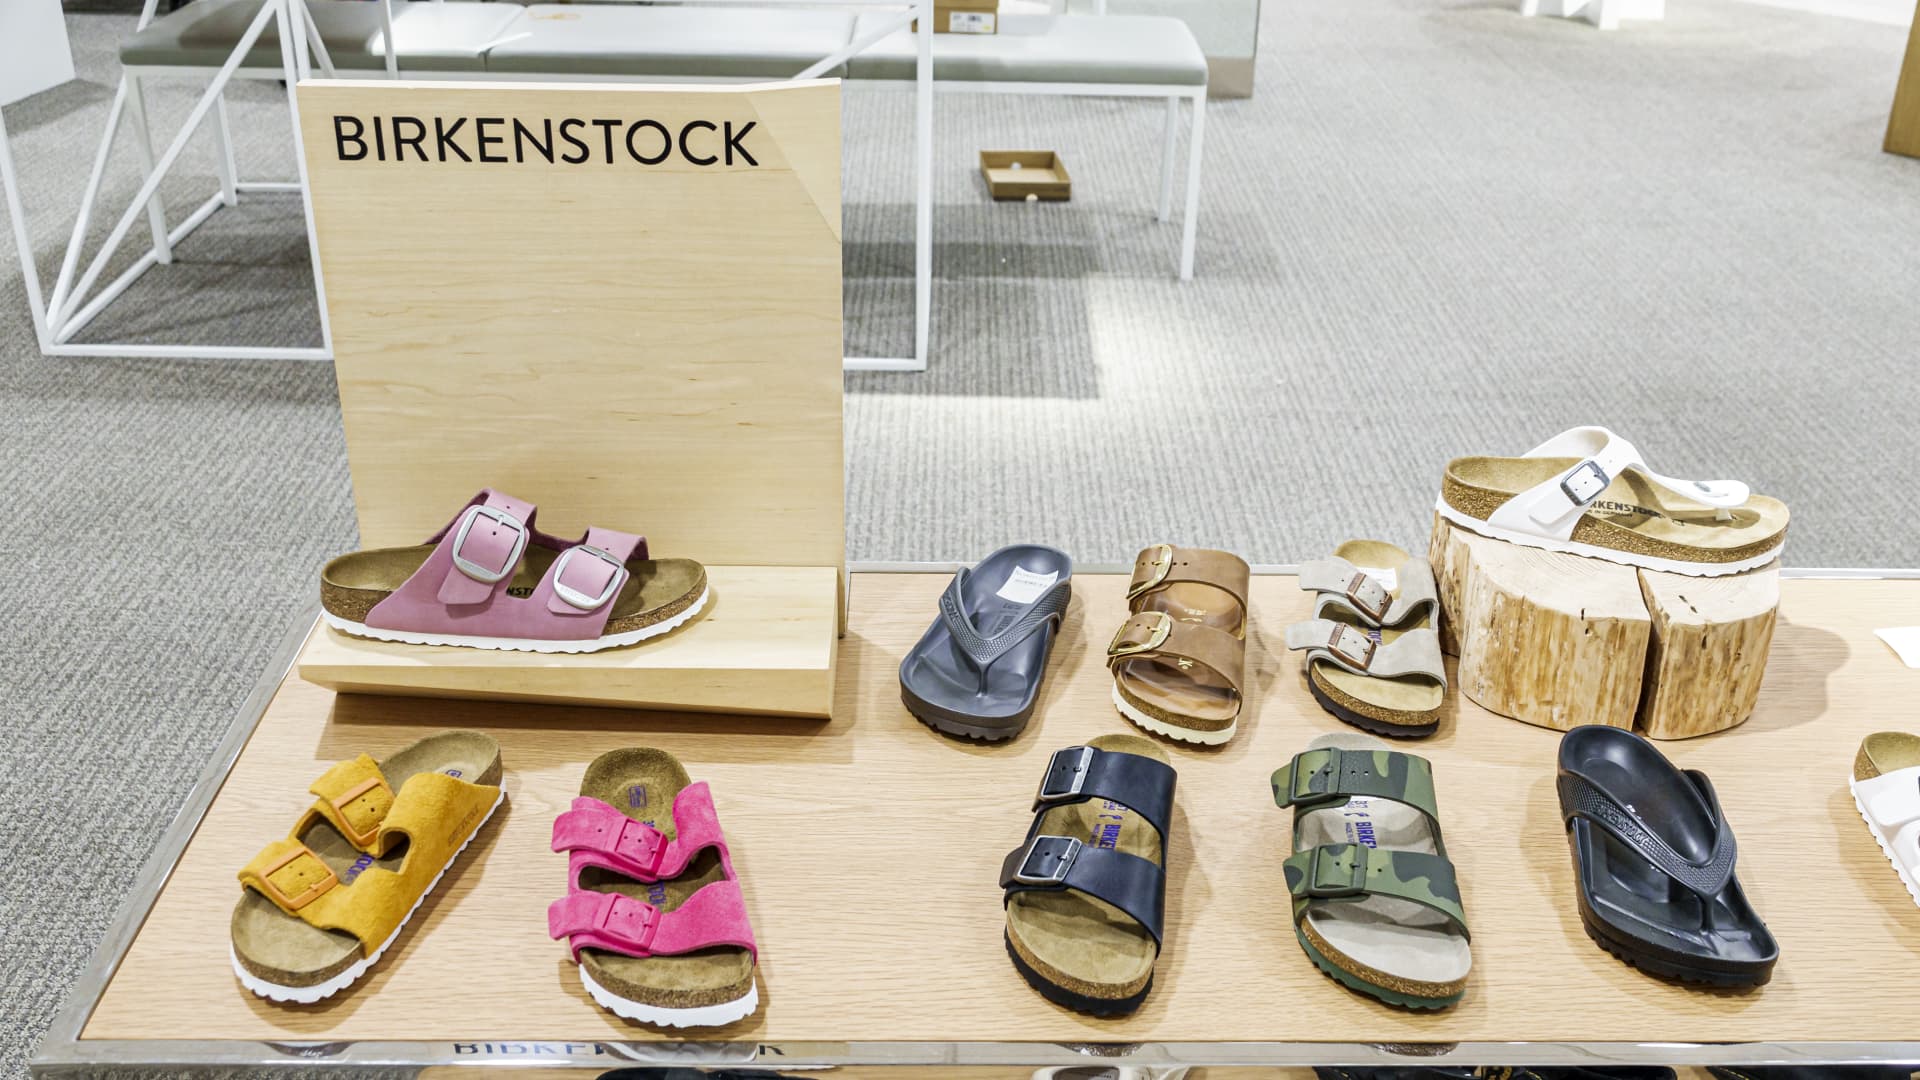 After Birkenstock's 'Barbie' bump, iconic footwear brand seeks a big part in IPO market